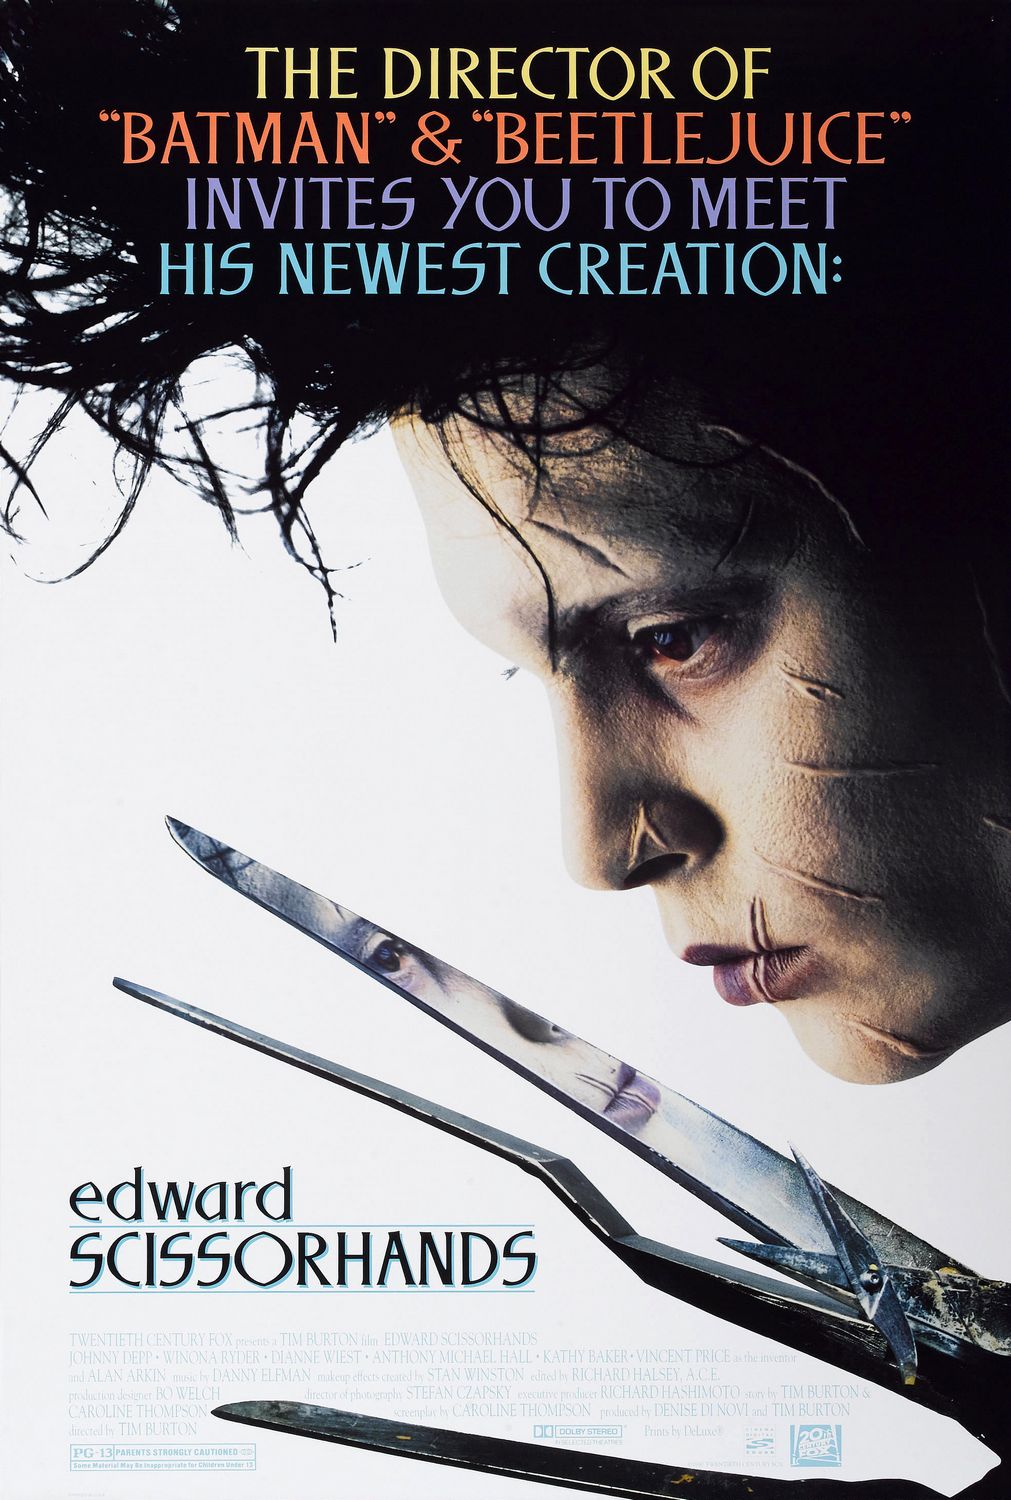 edward scissorhands film review essay